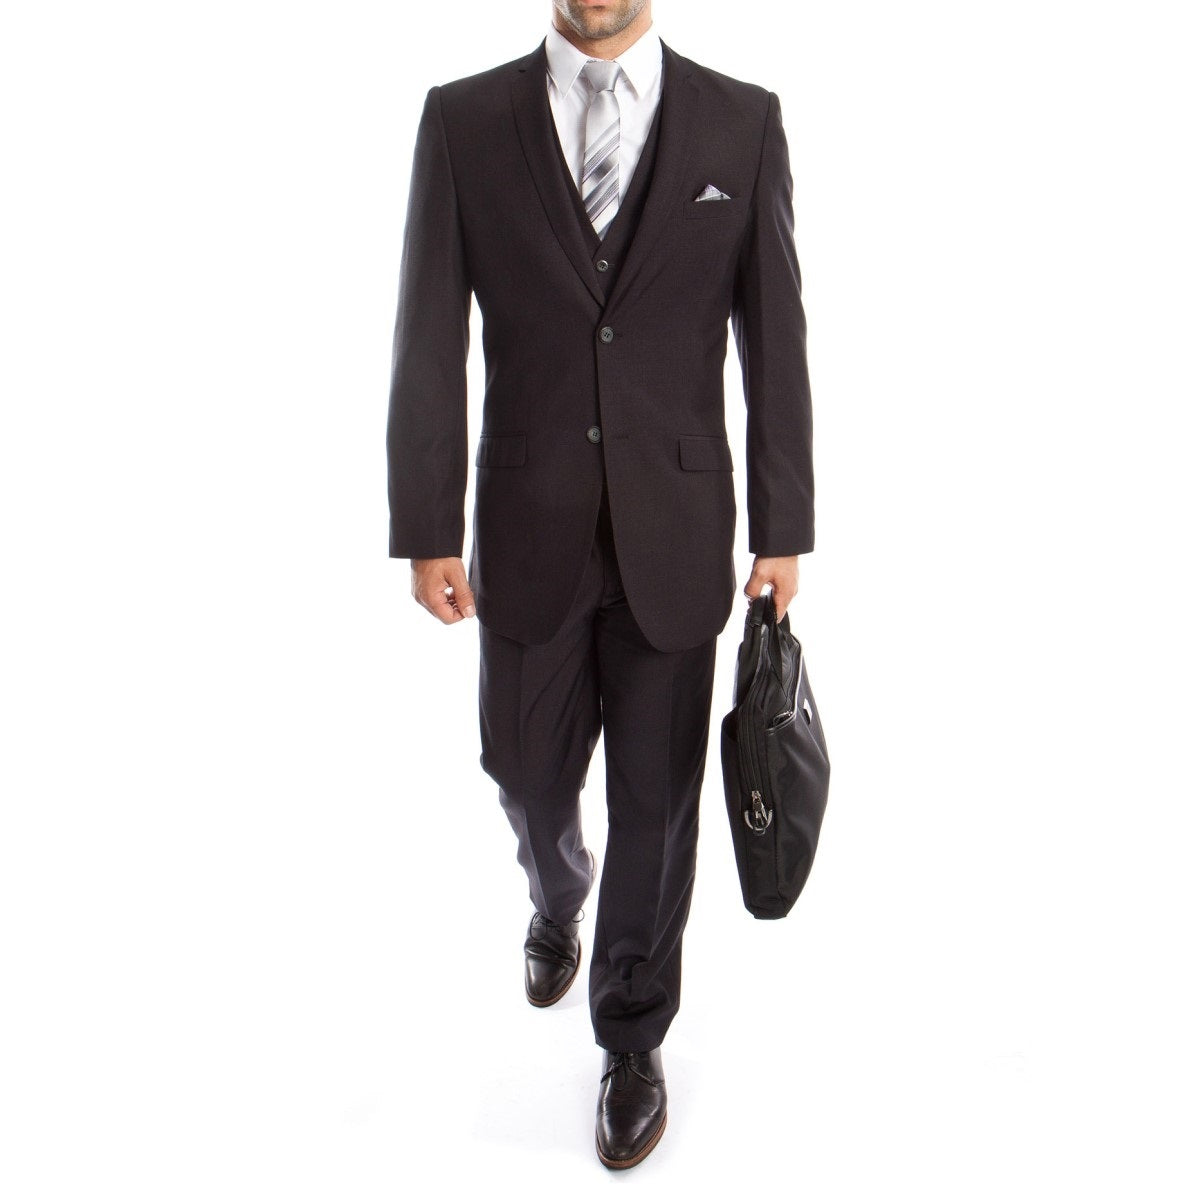 Traje Formal para Hombre TA-M154S-03 Charcoal - Formal Suit for Men